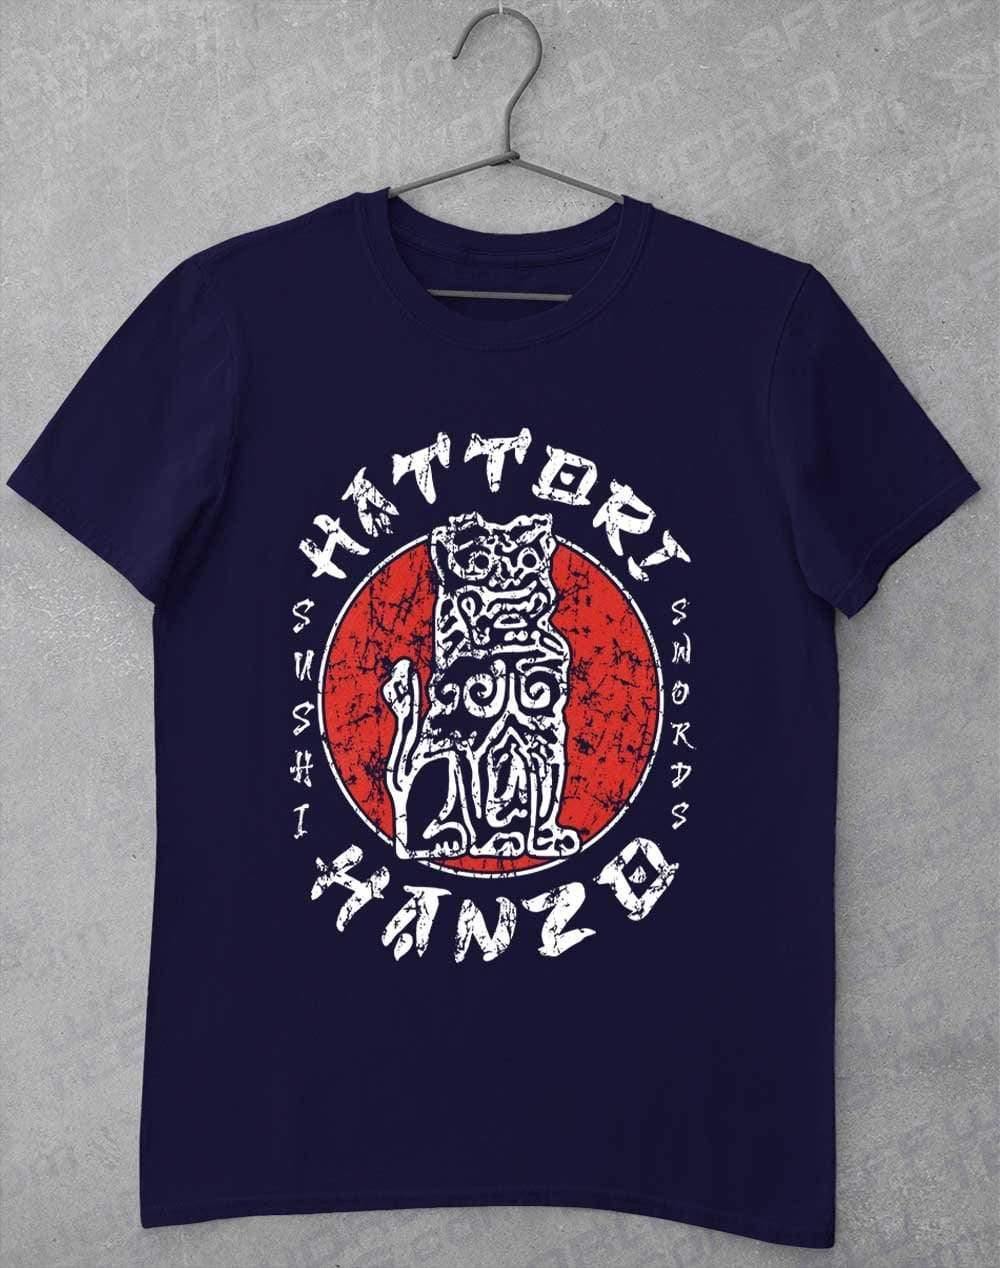 Hattori Hanzo T-Shirt S / Navy  - Off World Tees